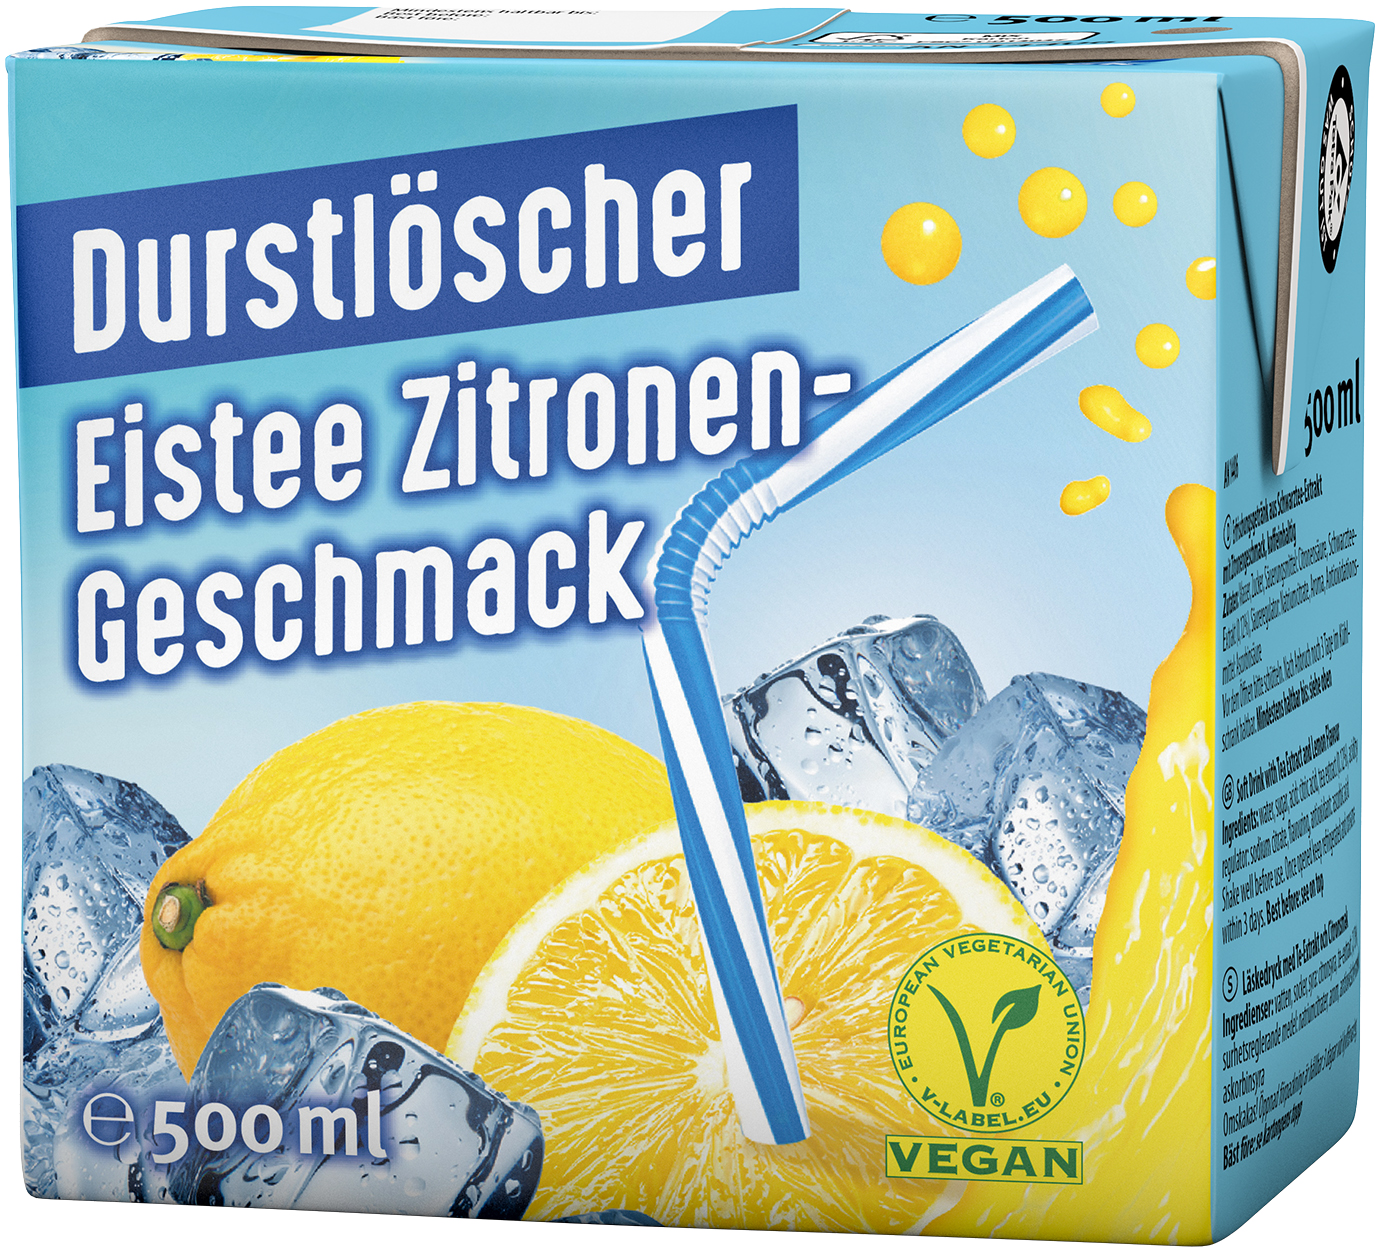 Durstlöscher Eistee Zitrone Karton 12 x 0,5 l Tetra-Pack